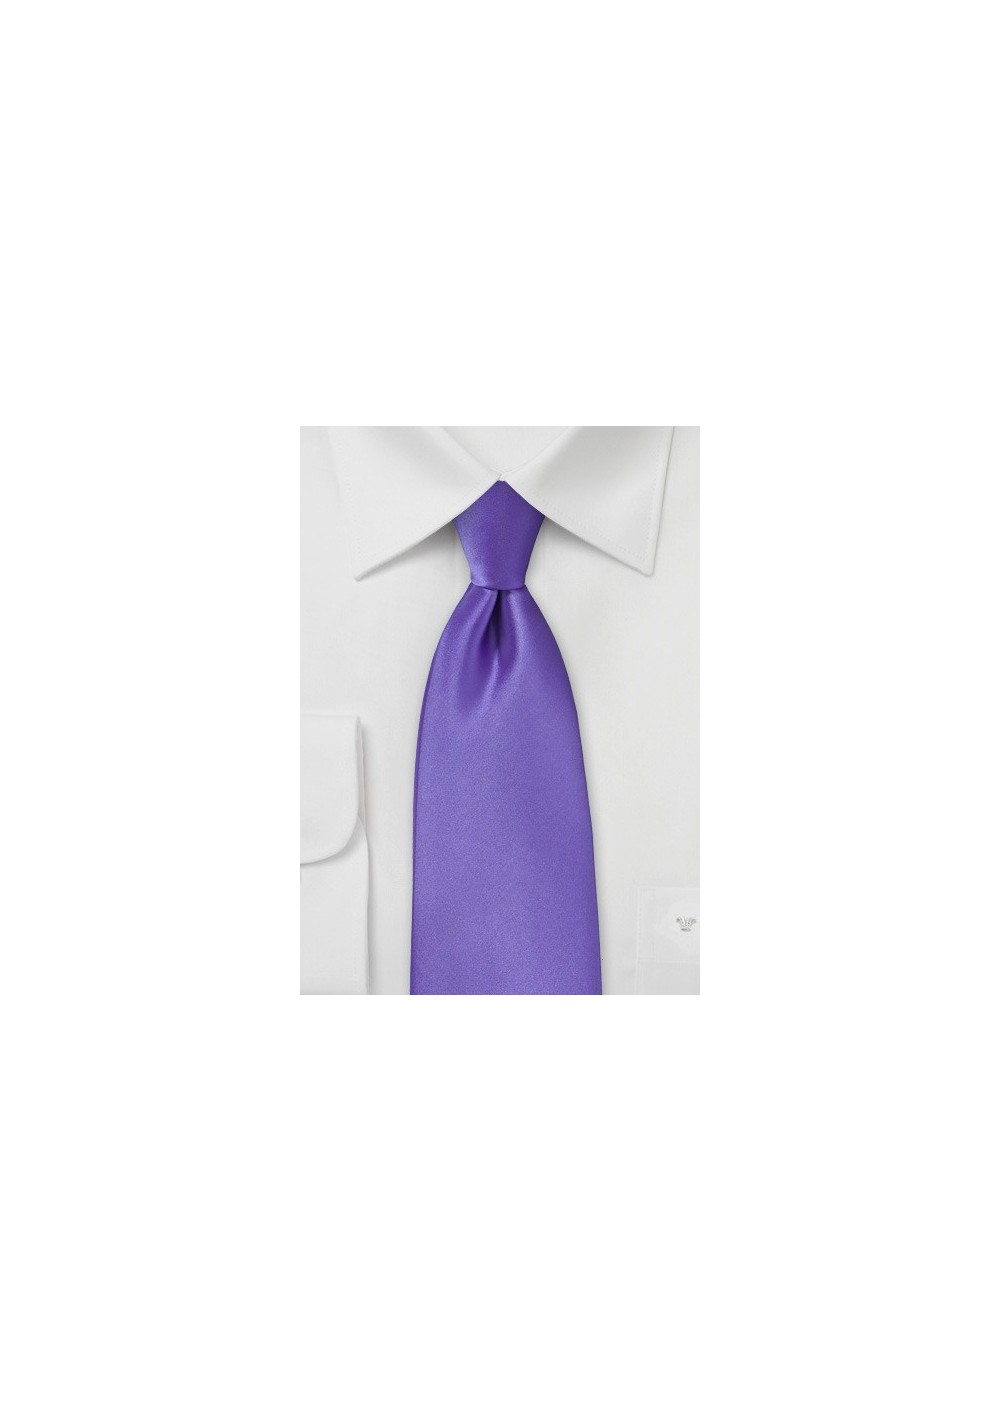 Freesia Purple Kids Sized Tie